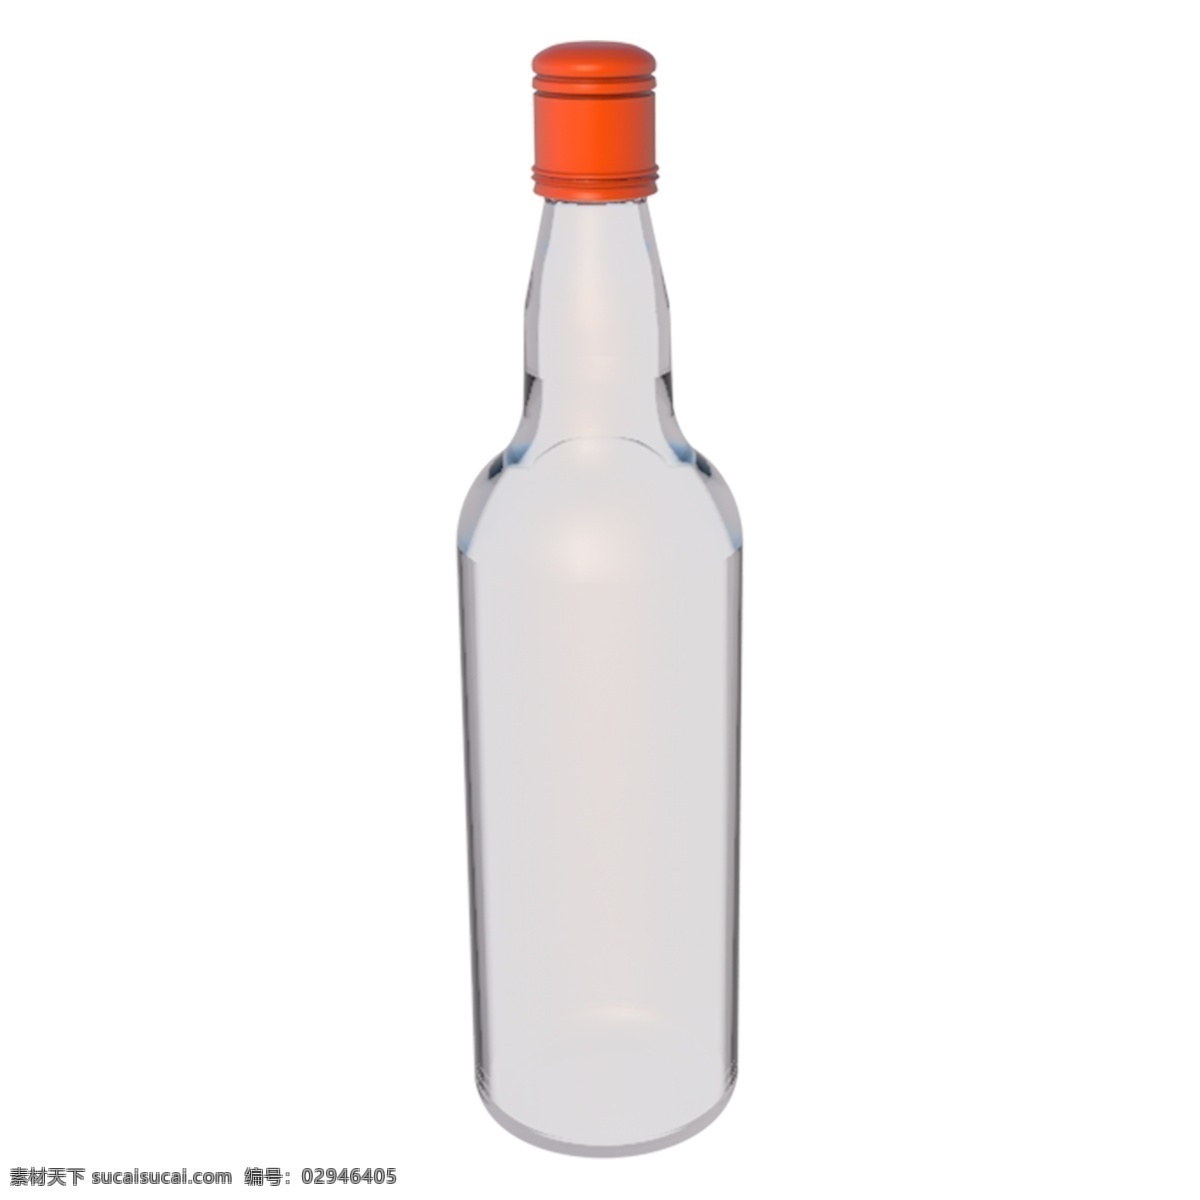 c4d 立体 玻璃 啤酒 瓶子 玻璃瓶 c4d瓶子 啤酒瓶 立体瓶子 立体玻璃瓶子